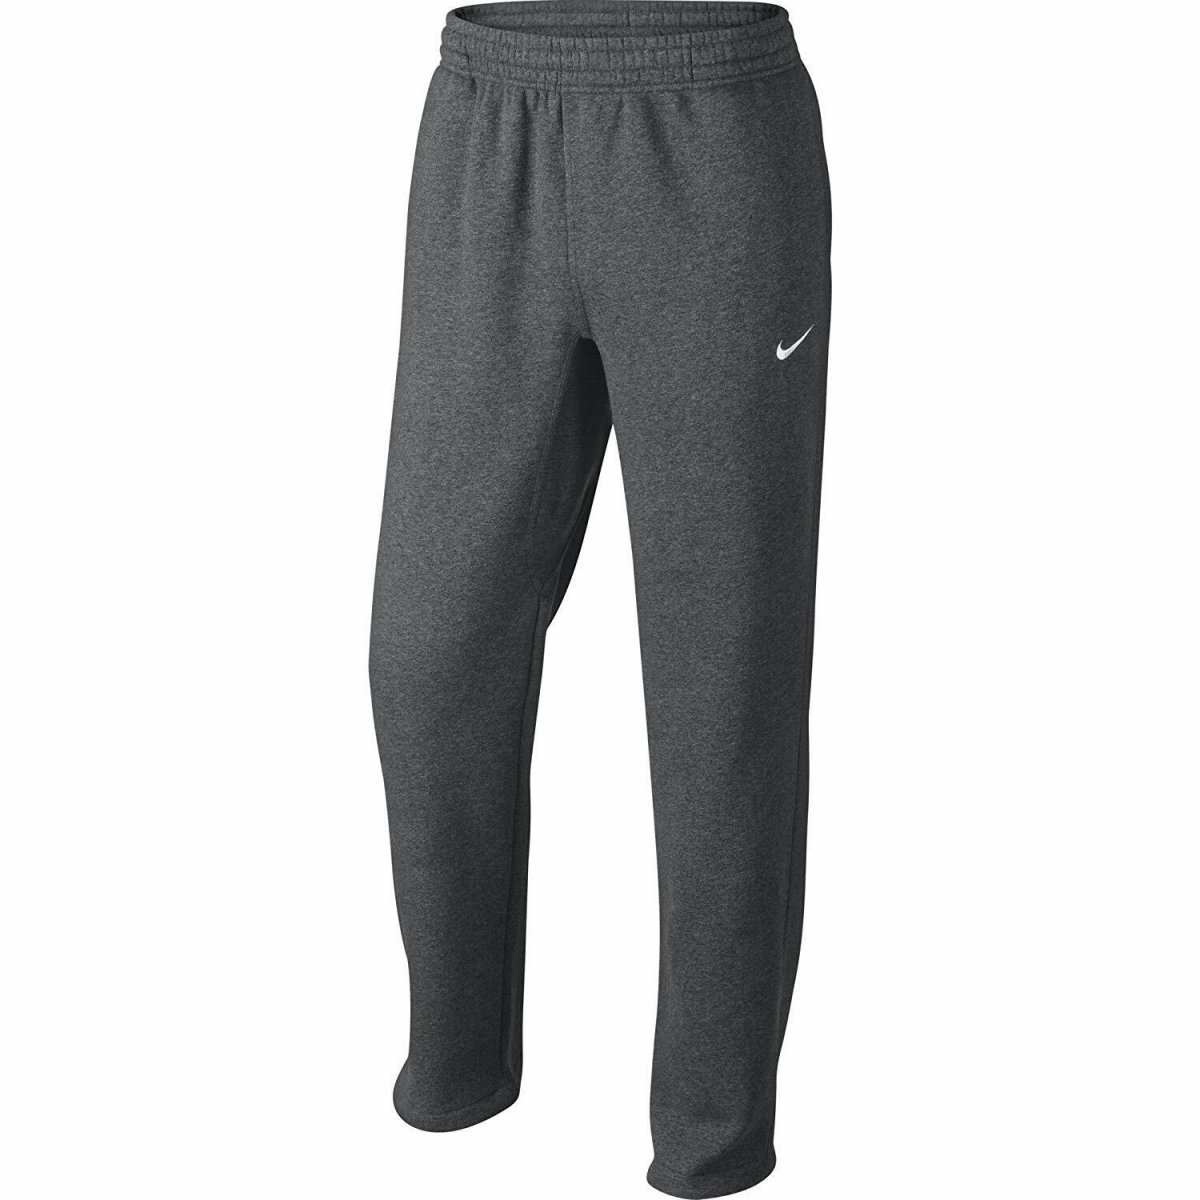 Брюки спортивные Nike Club Cuff Swoosh Pants, 611459-063, серый цвет, s размер